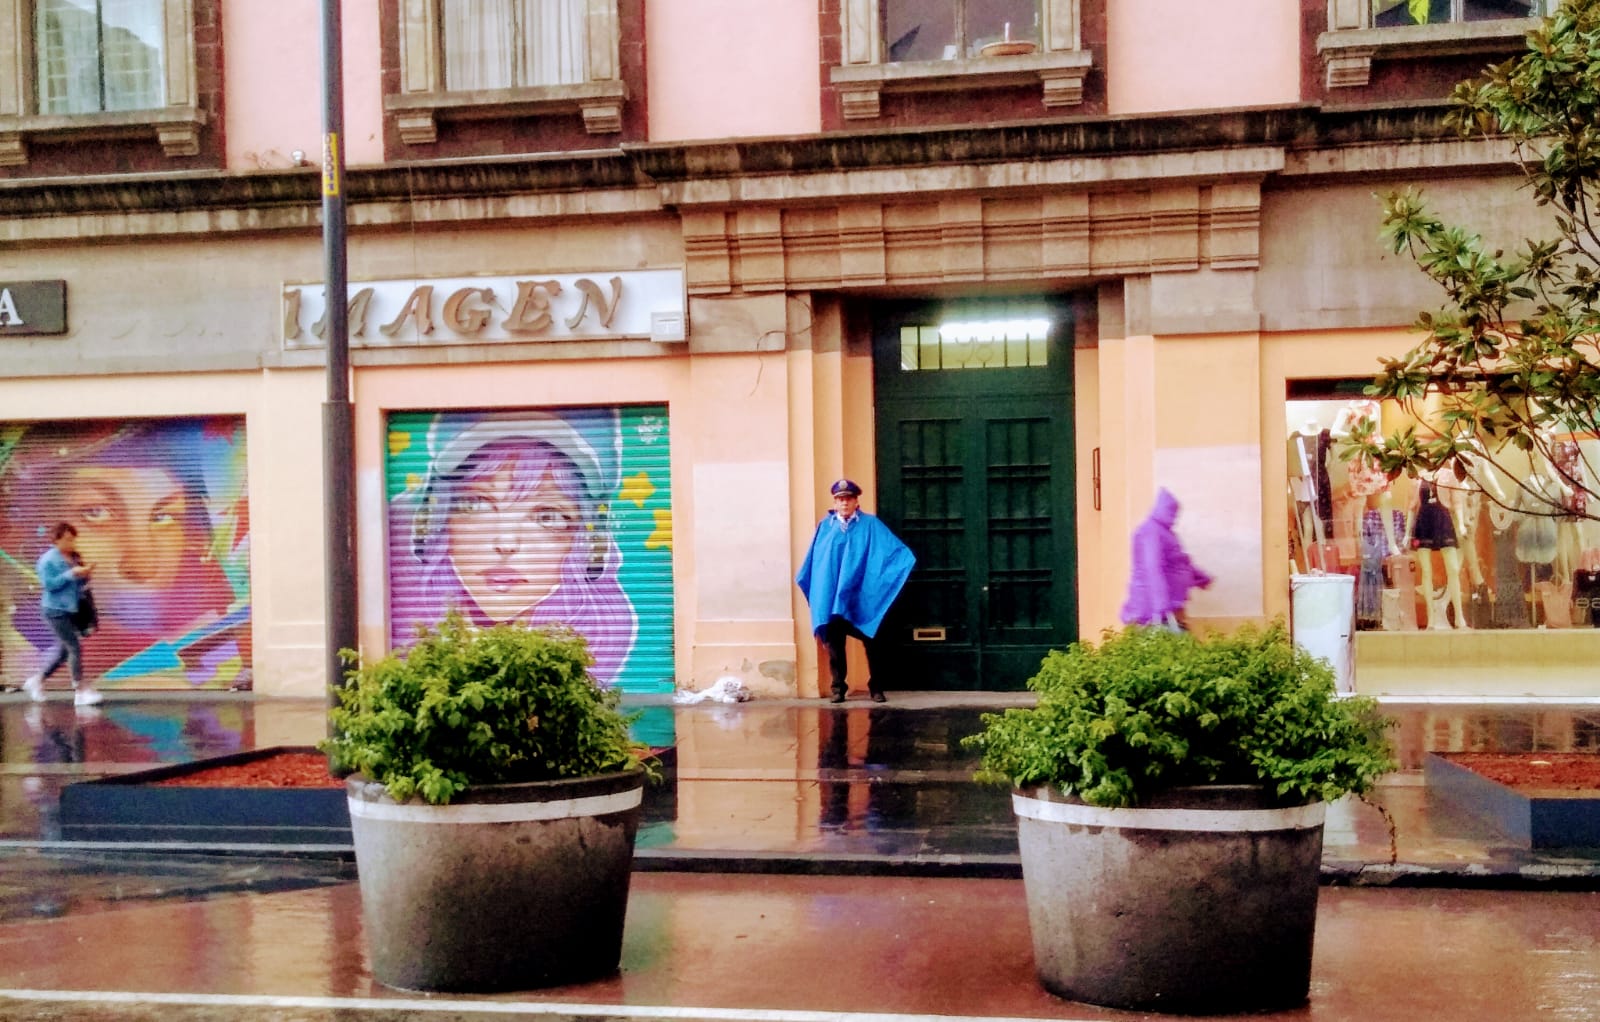 Eldad Levy. "A security guard in a rainy Historic Center of Mexico City."